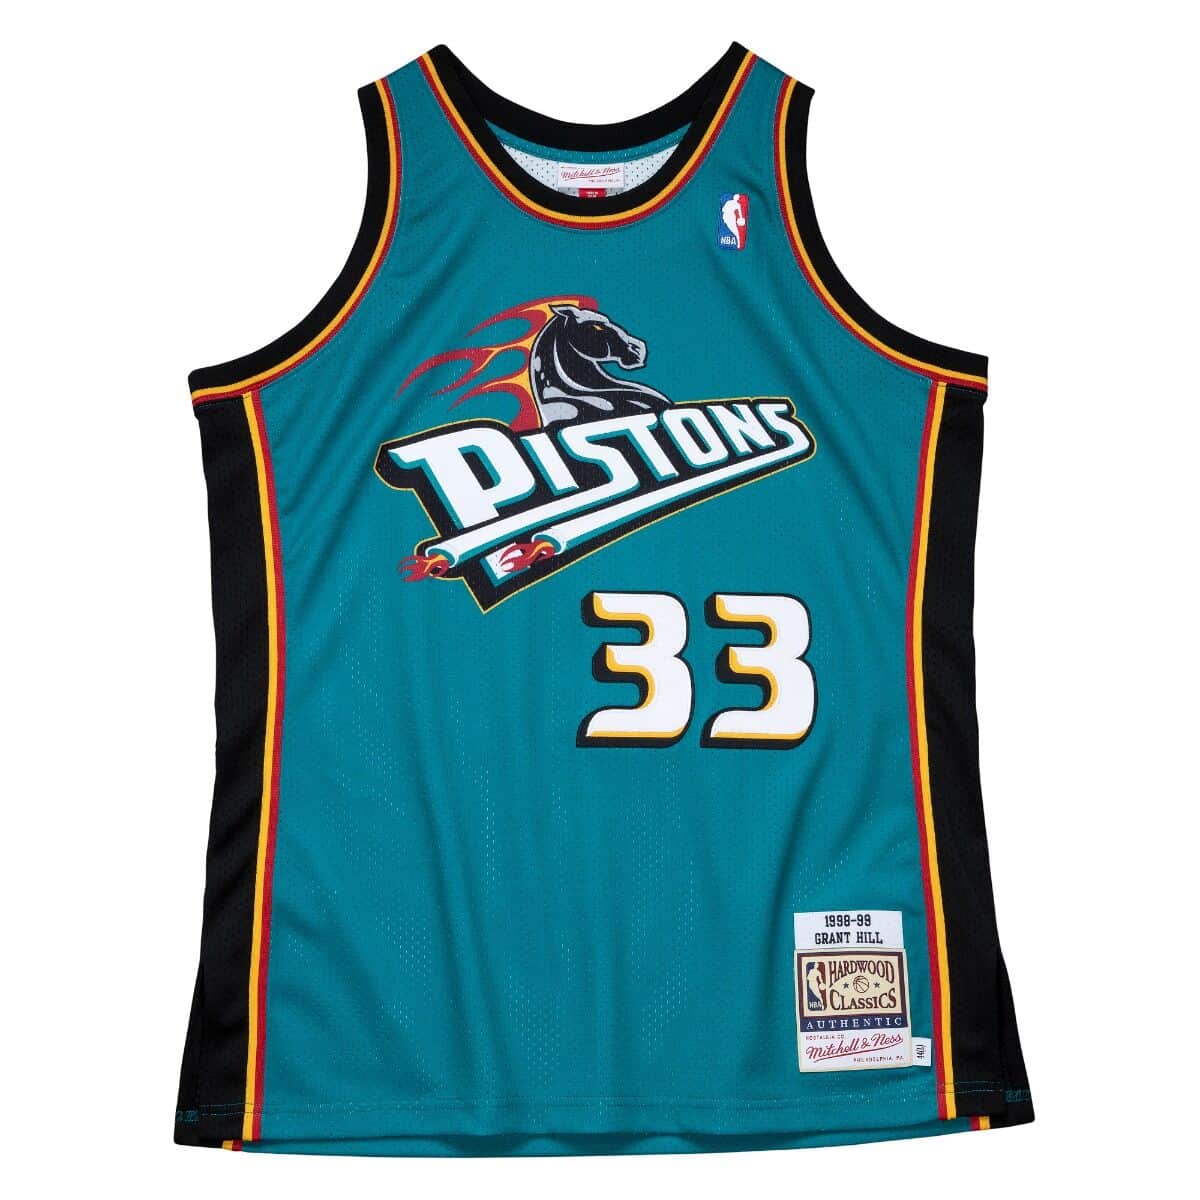 Authentic Grant Hill Detroit Pistons 1998-99 Jersey